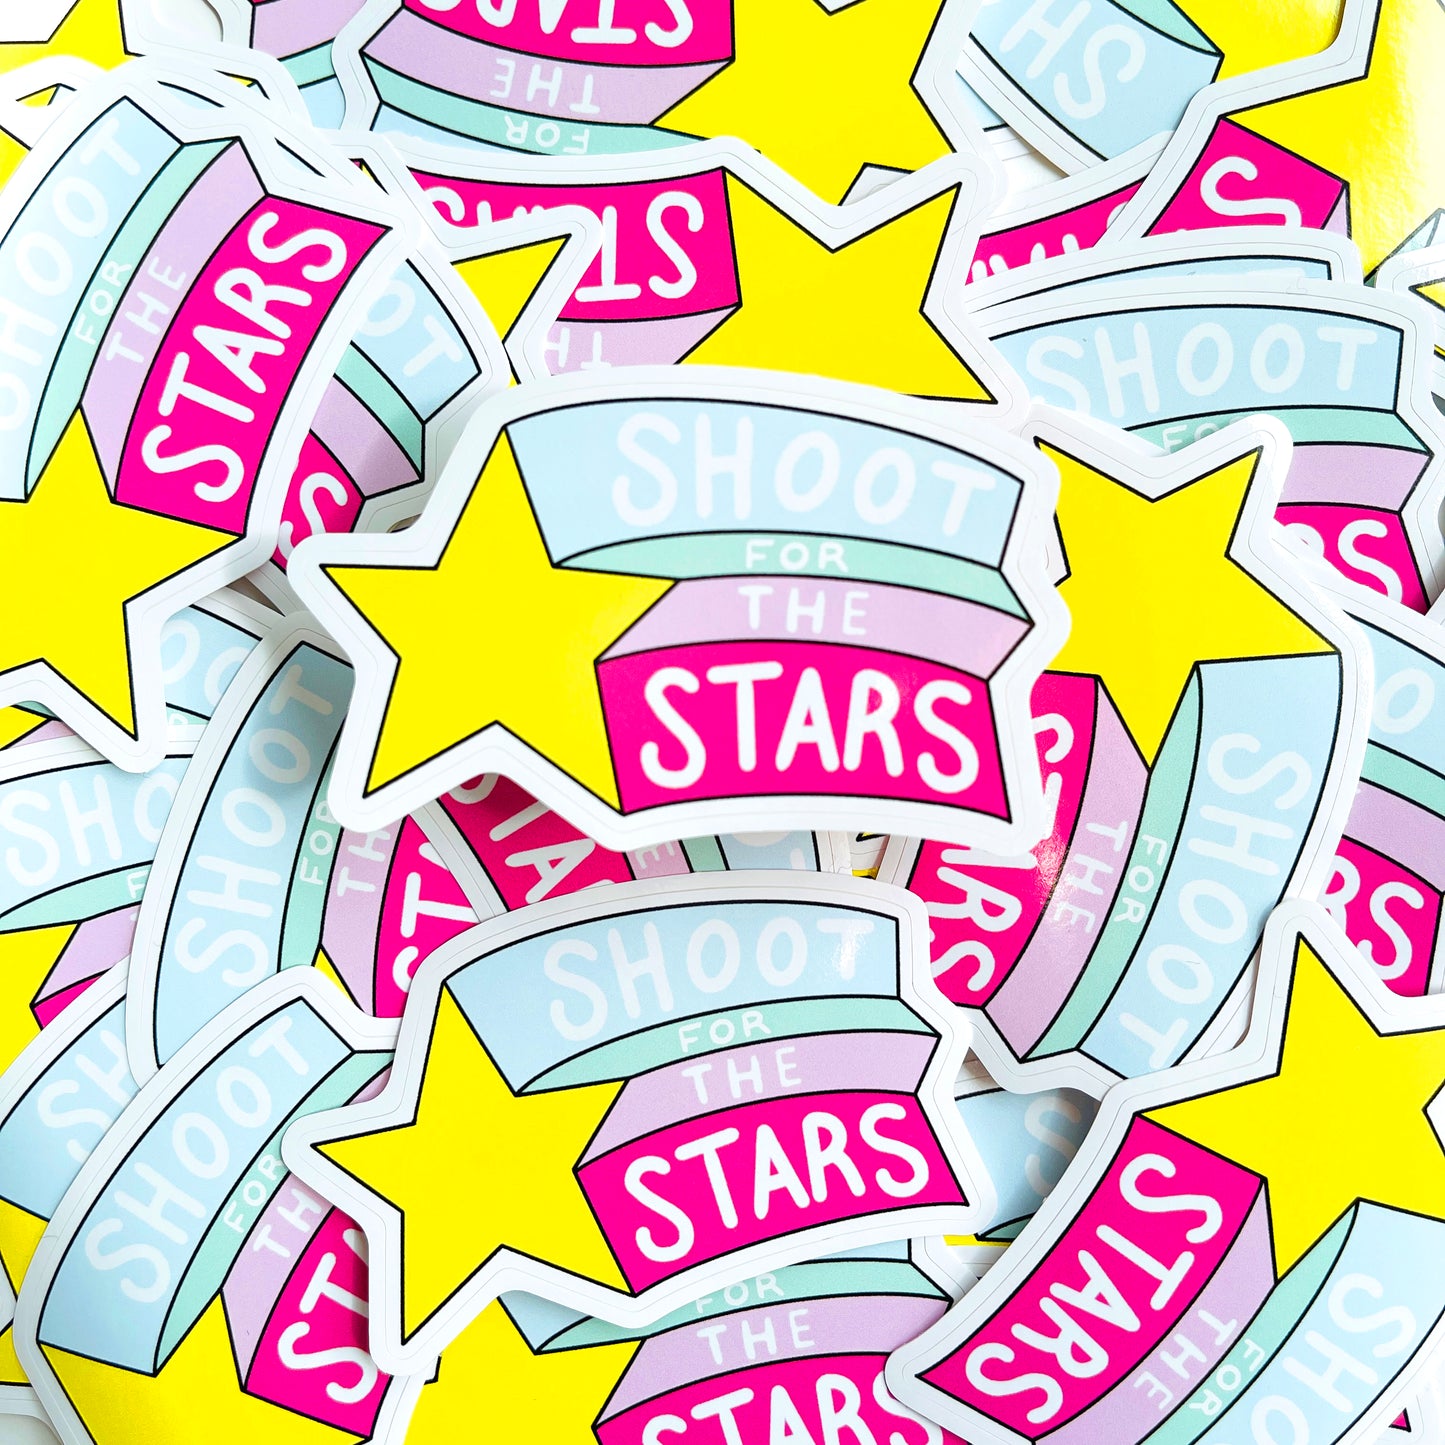 Shoot for the Stars  sticker - Loubiblu